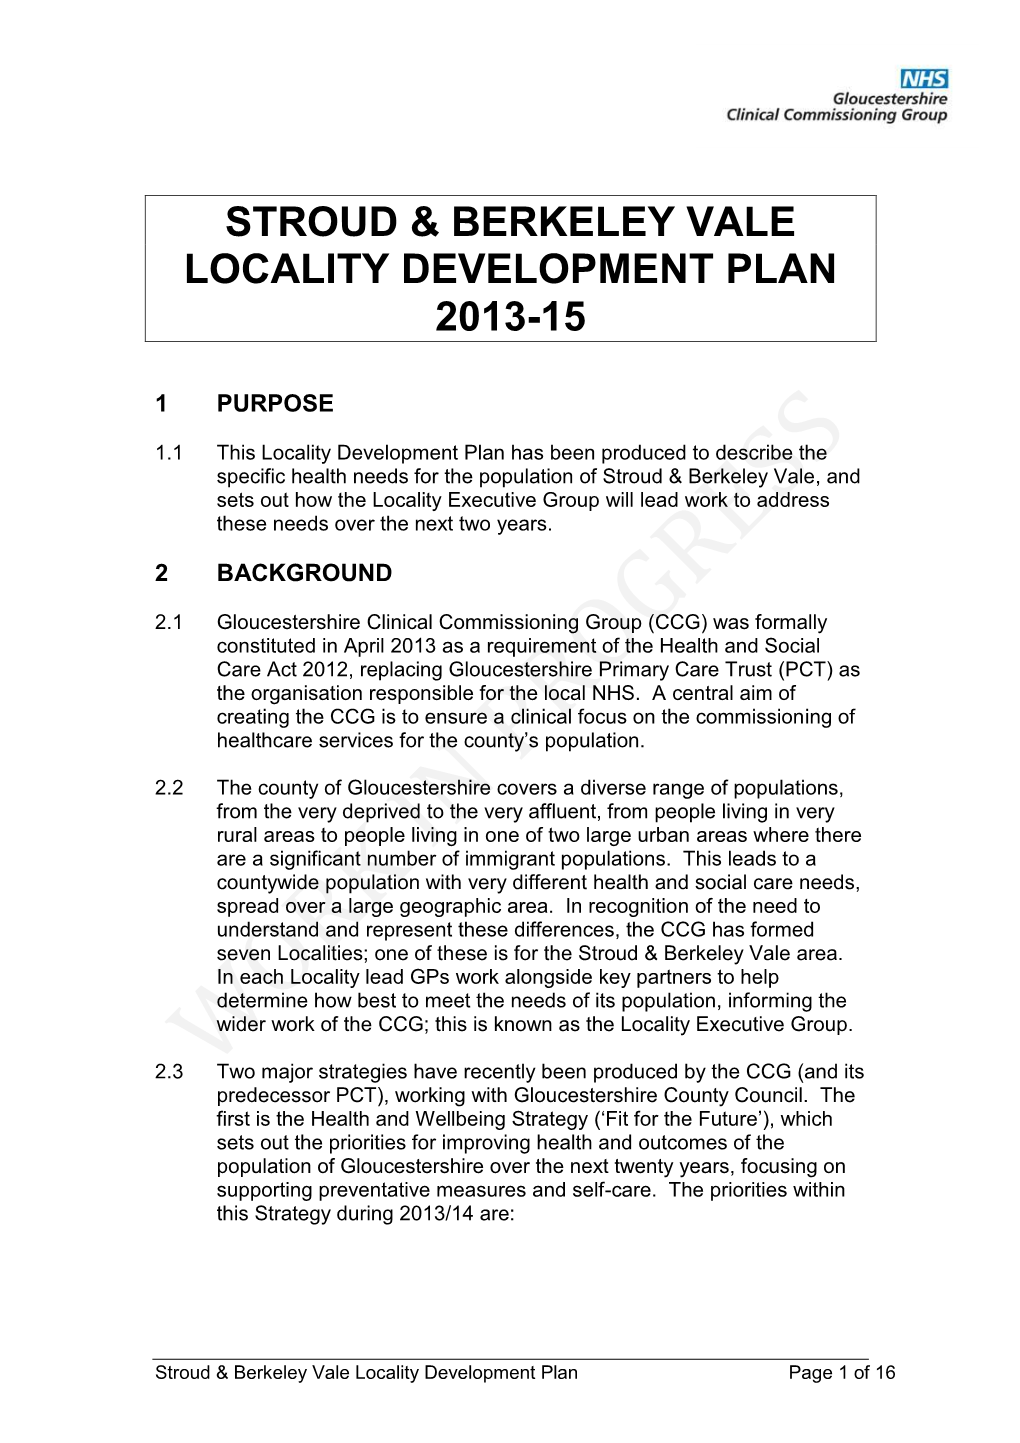 Stroud & Berkeley Vale Locality Development Plan